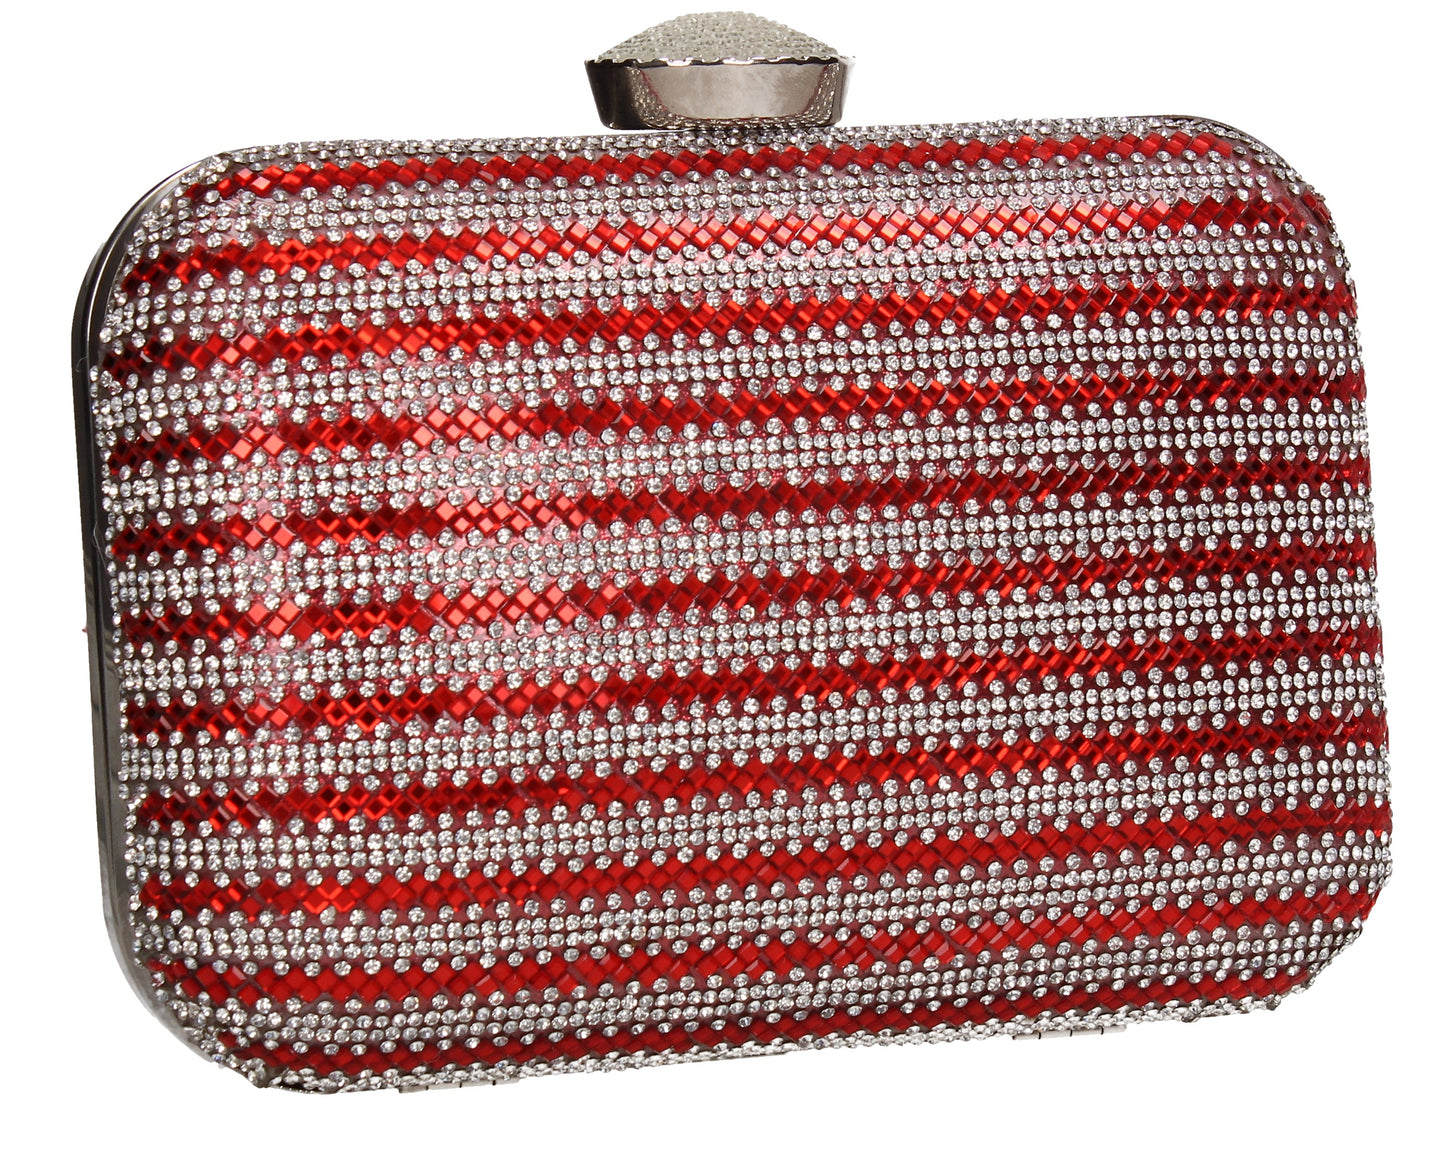 SWANKYSWANS Jane Clutch Bag Red Cute Cheap Clutch Bag For Weddings School and Work